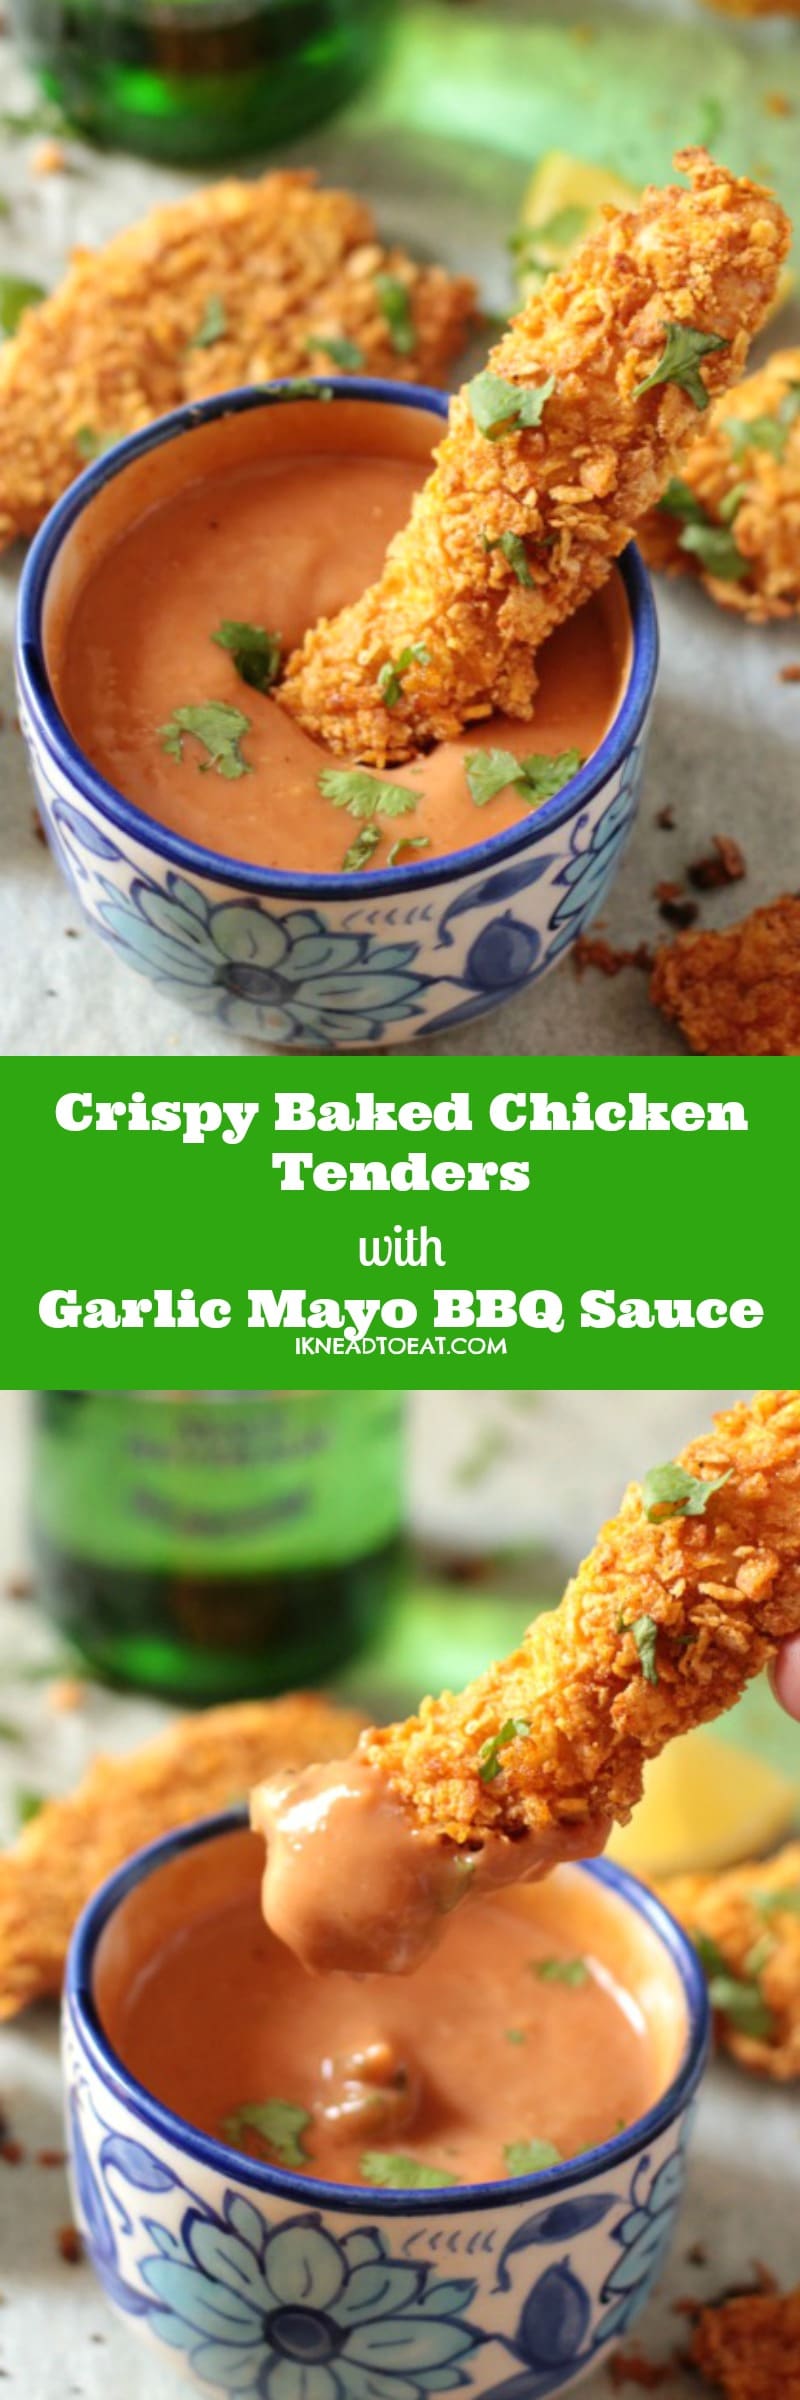 Crispy Baked Chicken Tenders with Garlic Mayo BBQ Sauce